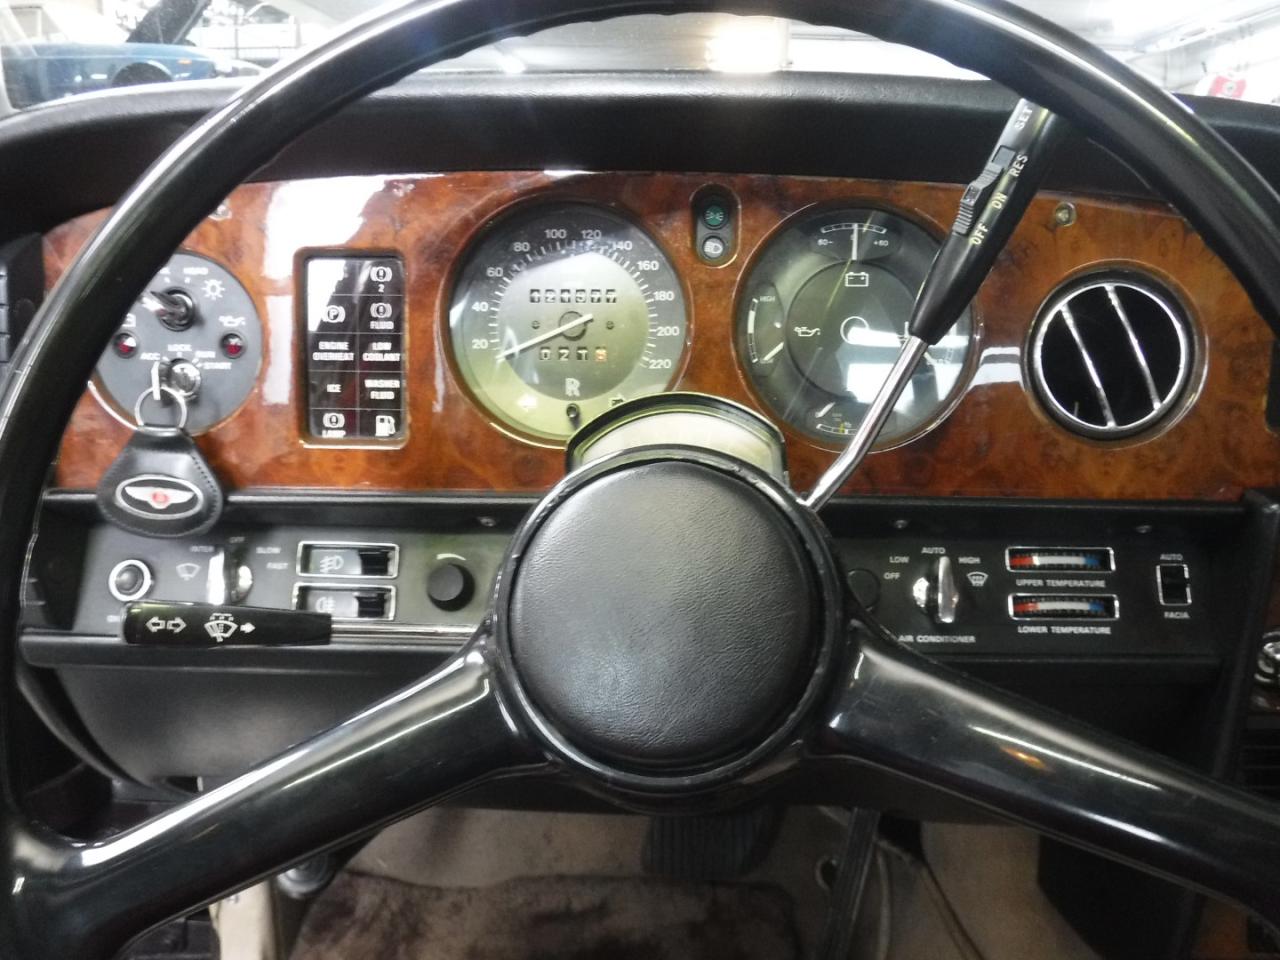 1983 Bentley Mulsanne